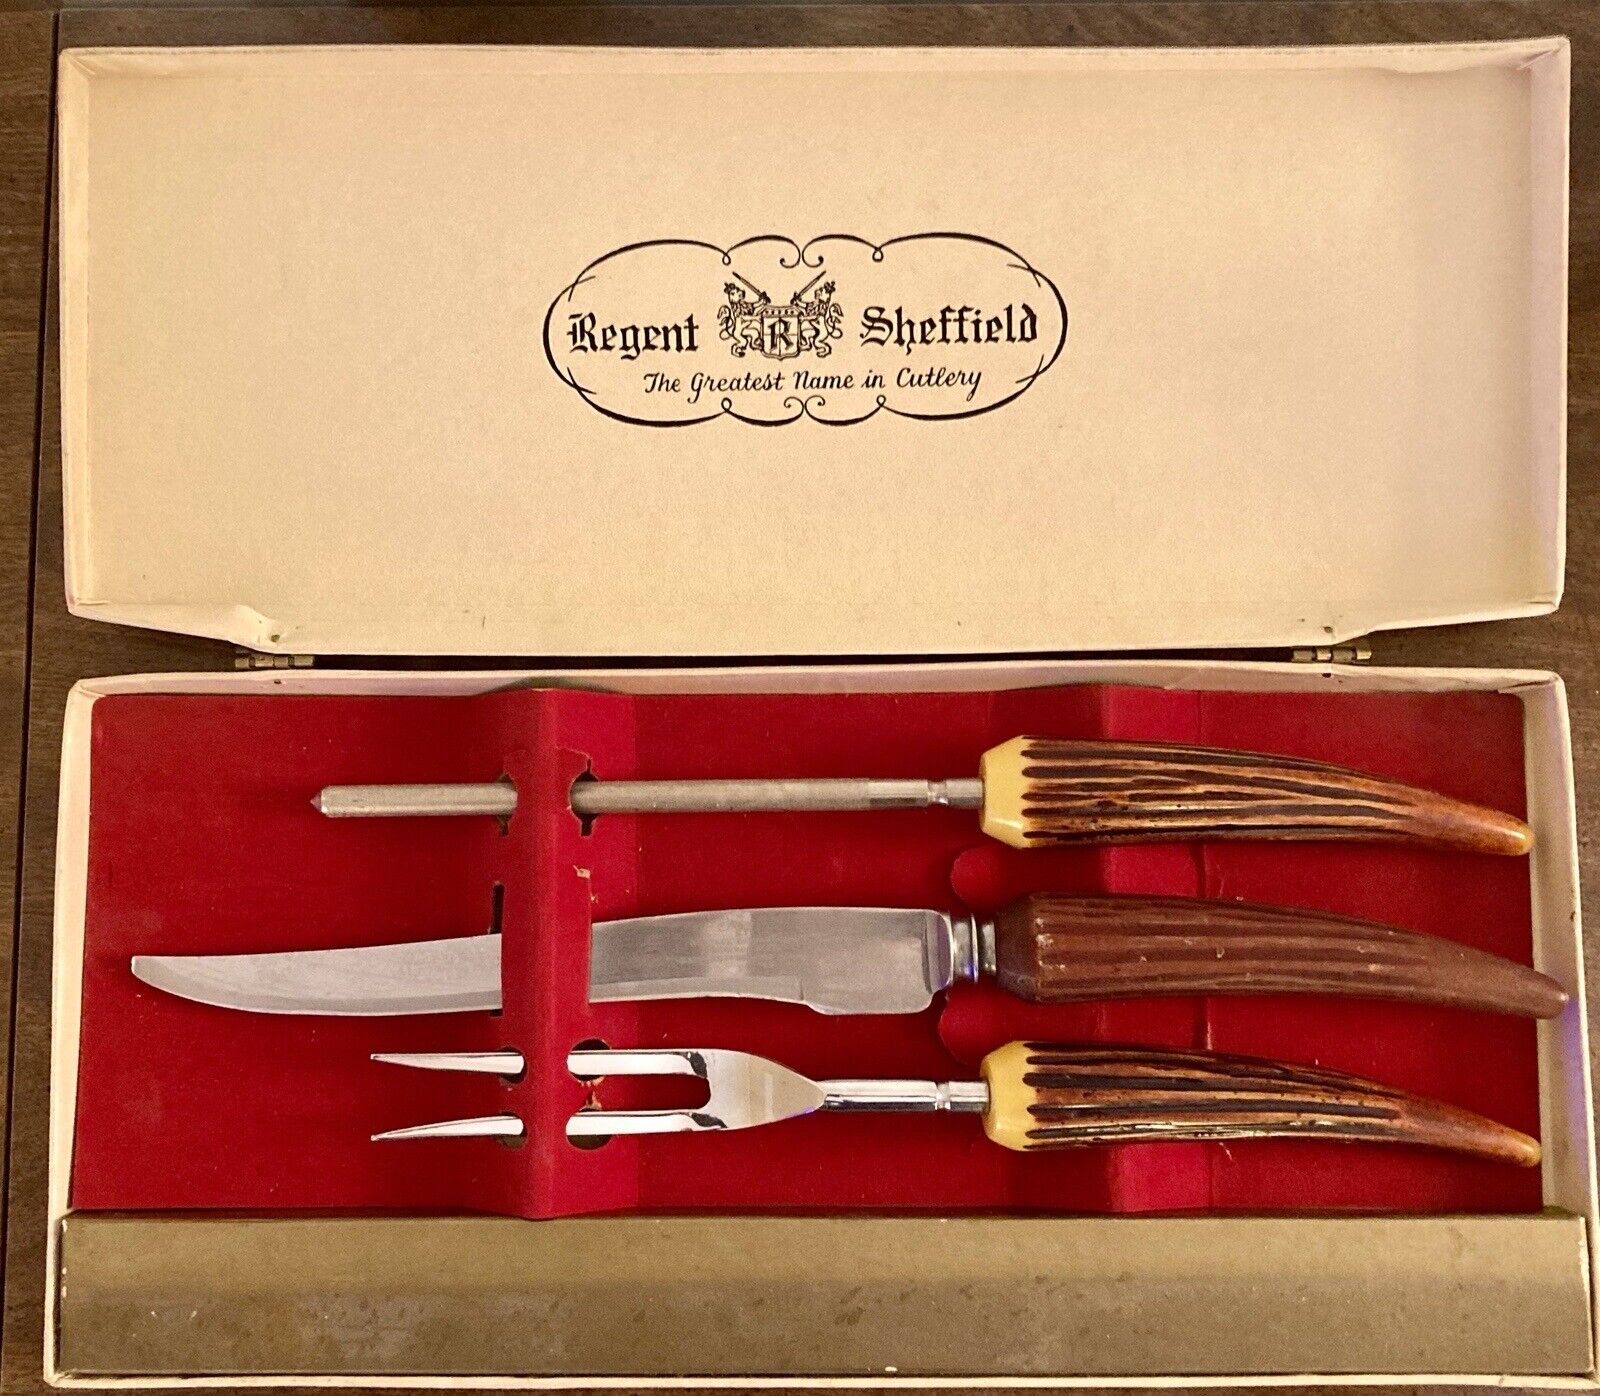 VTG Regal Crest Deluxe Quality Cutlery Set bakelite handles Sheffield, England